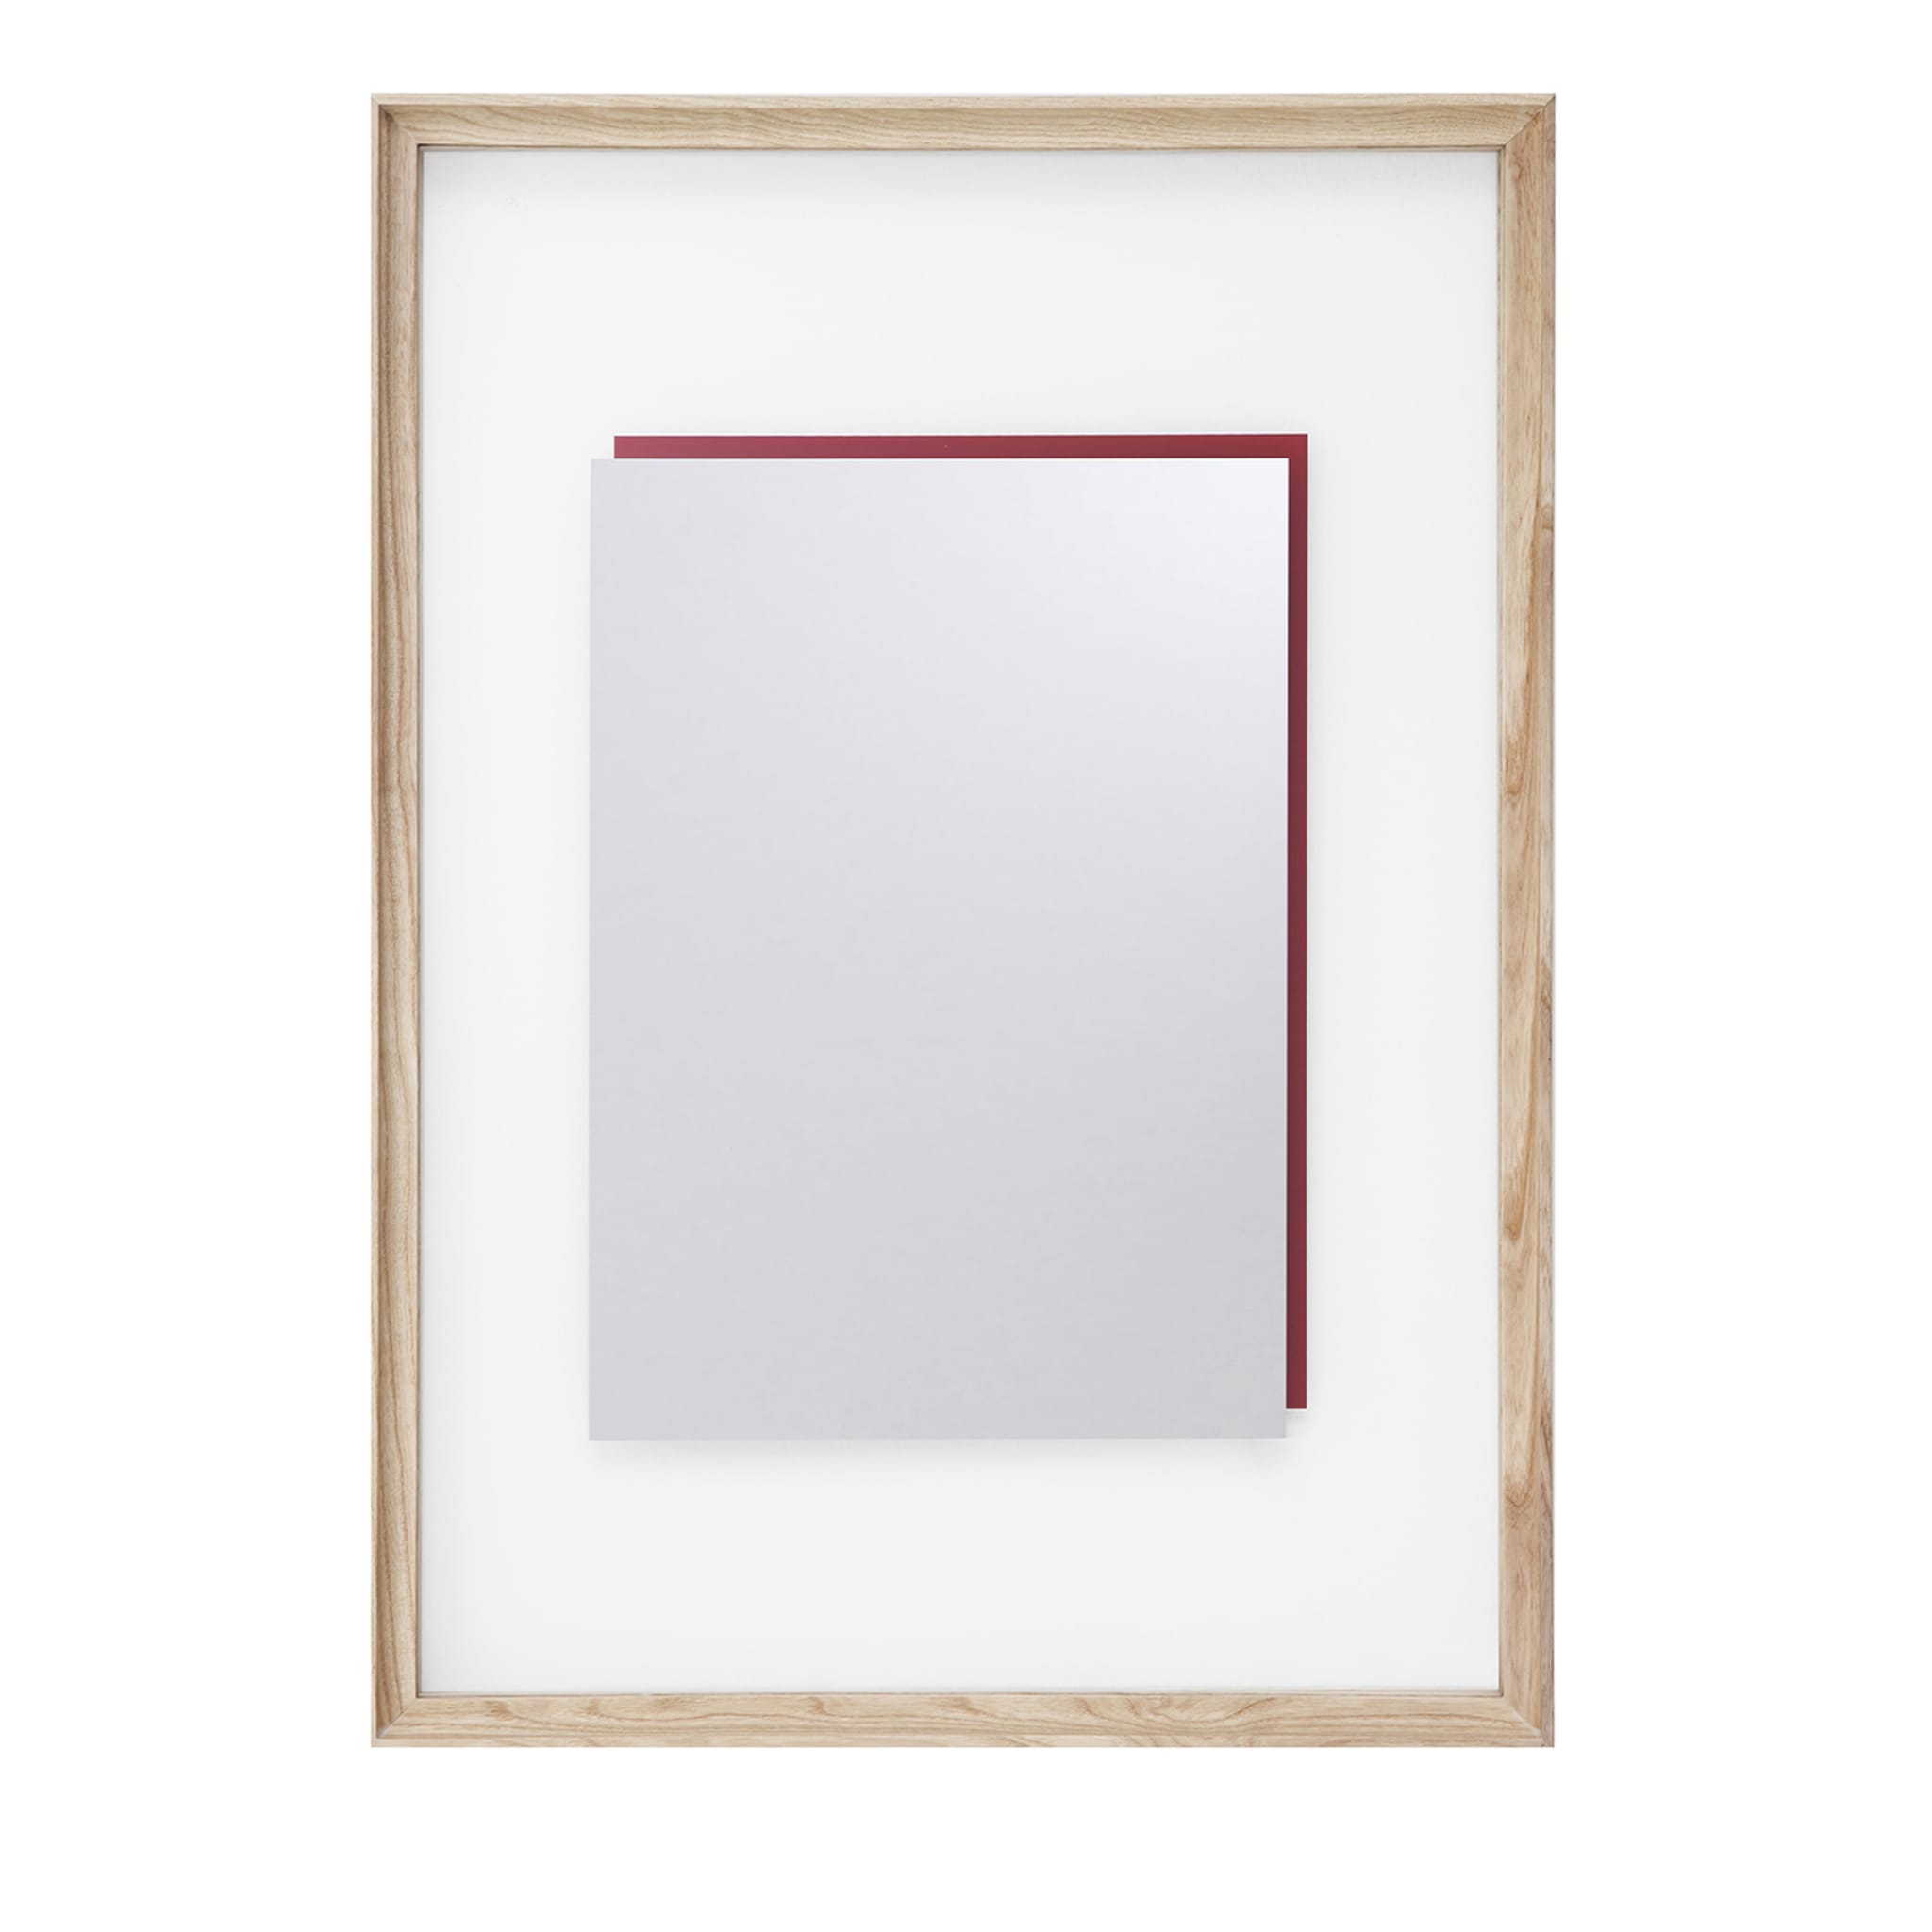 Deadline Who's Afraid of Red Rectangular mirror #1 - Main view